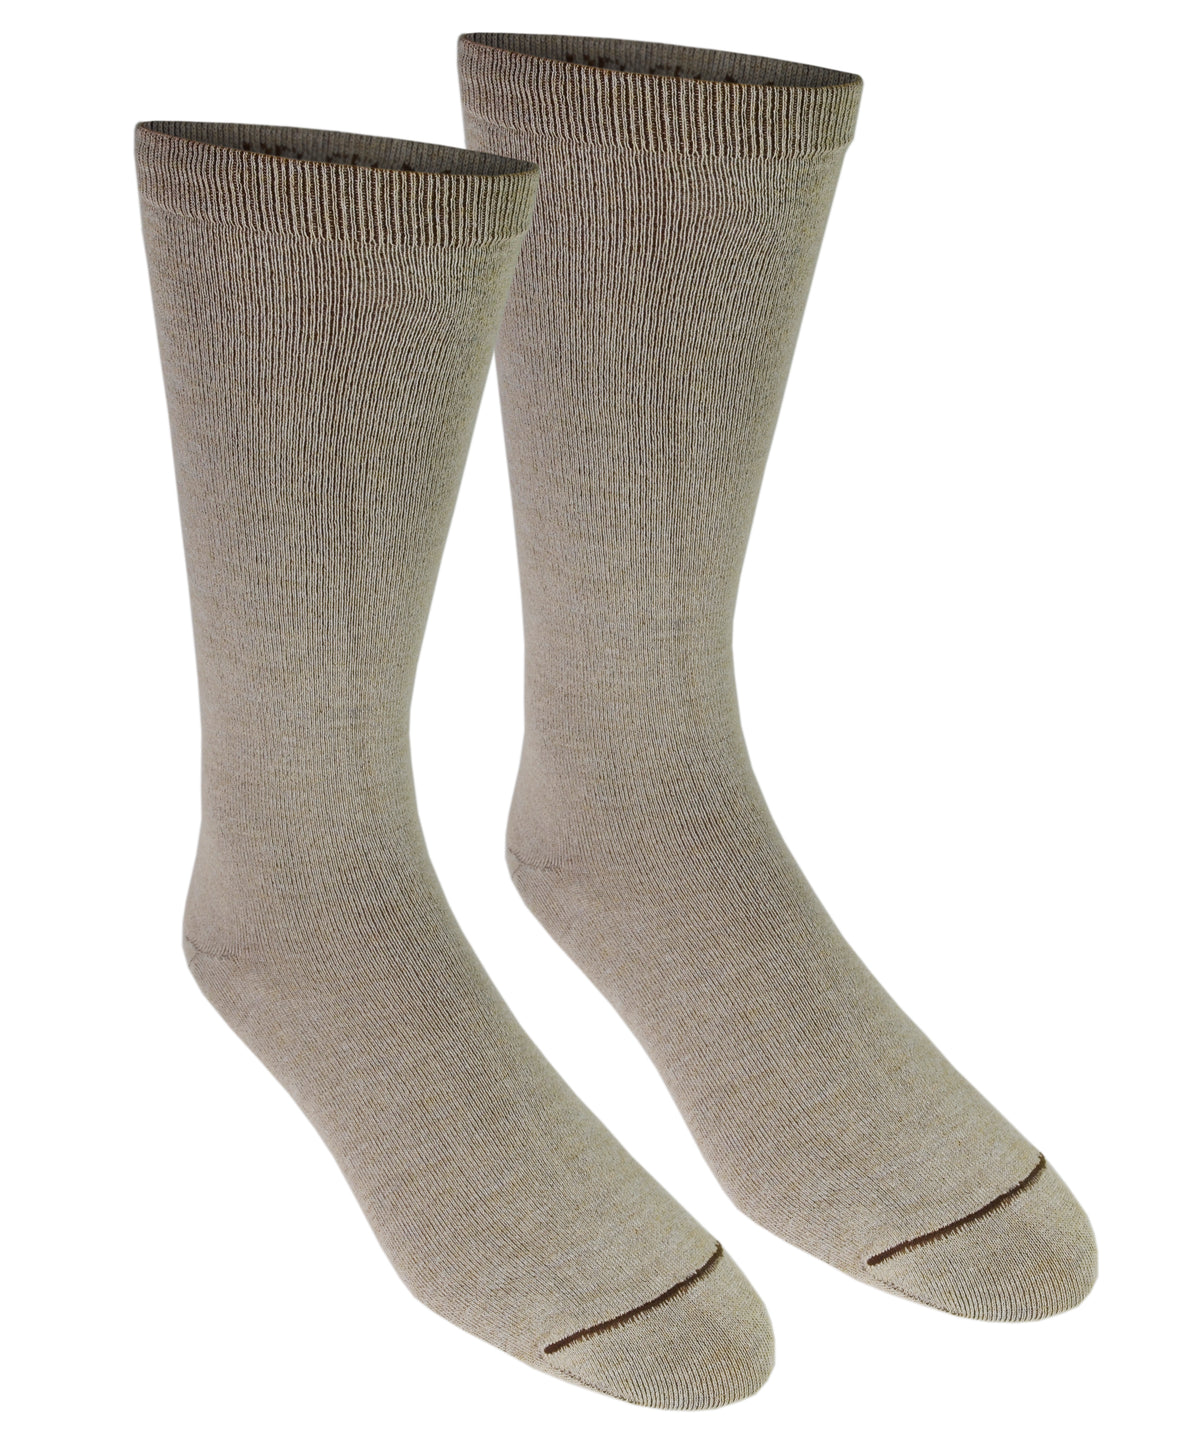 Alpaca Socks Wholesale Made Usa  International Society of Precision  Agriculture